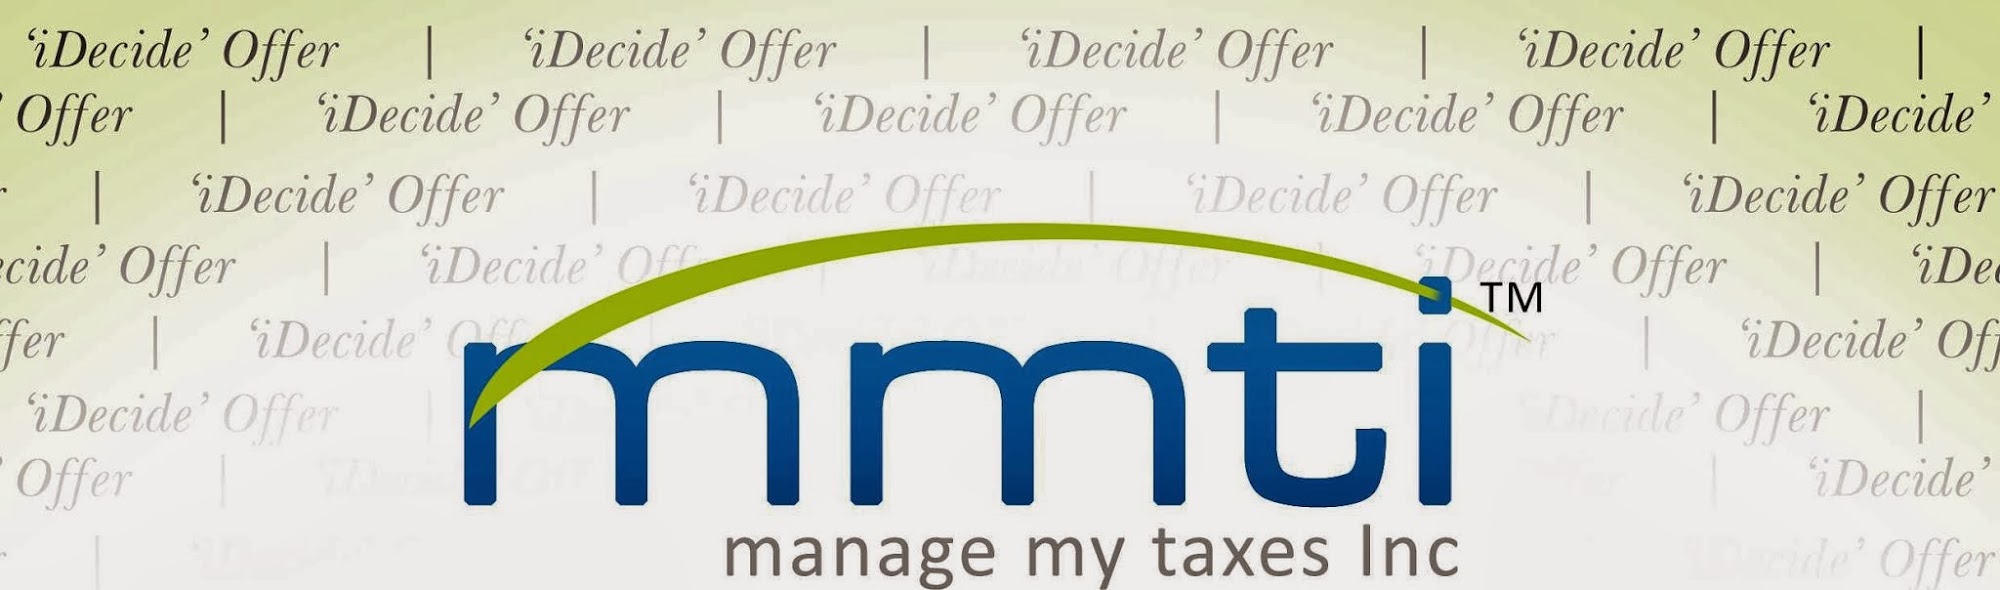 Manage My Taxes Inc - Pay Less Taxes Legally